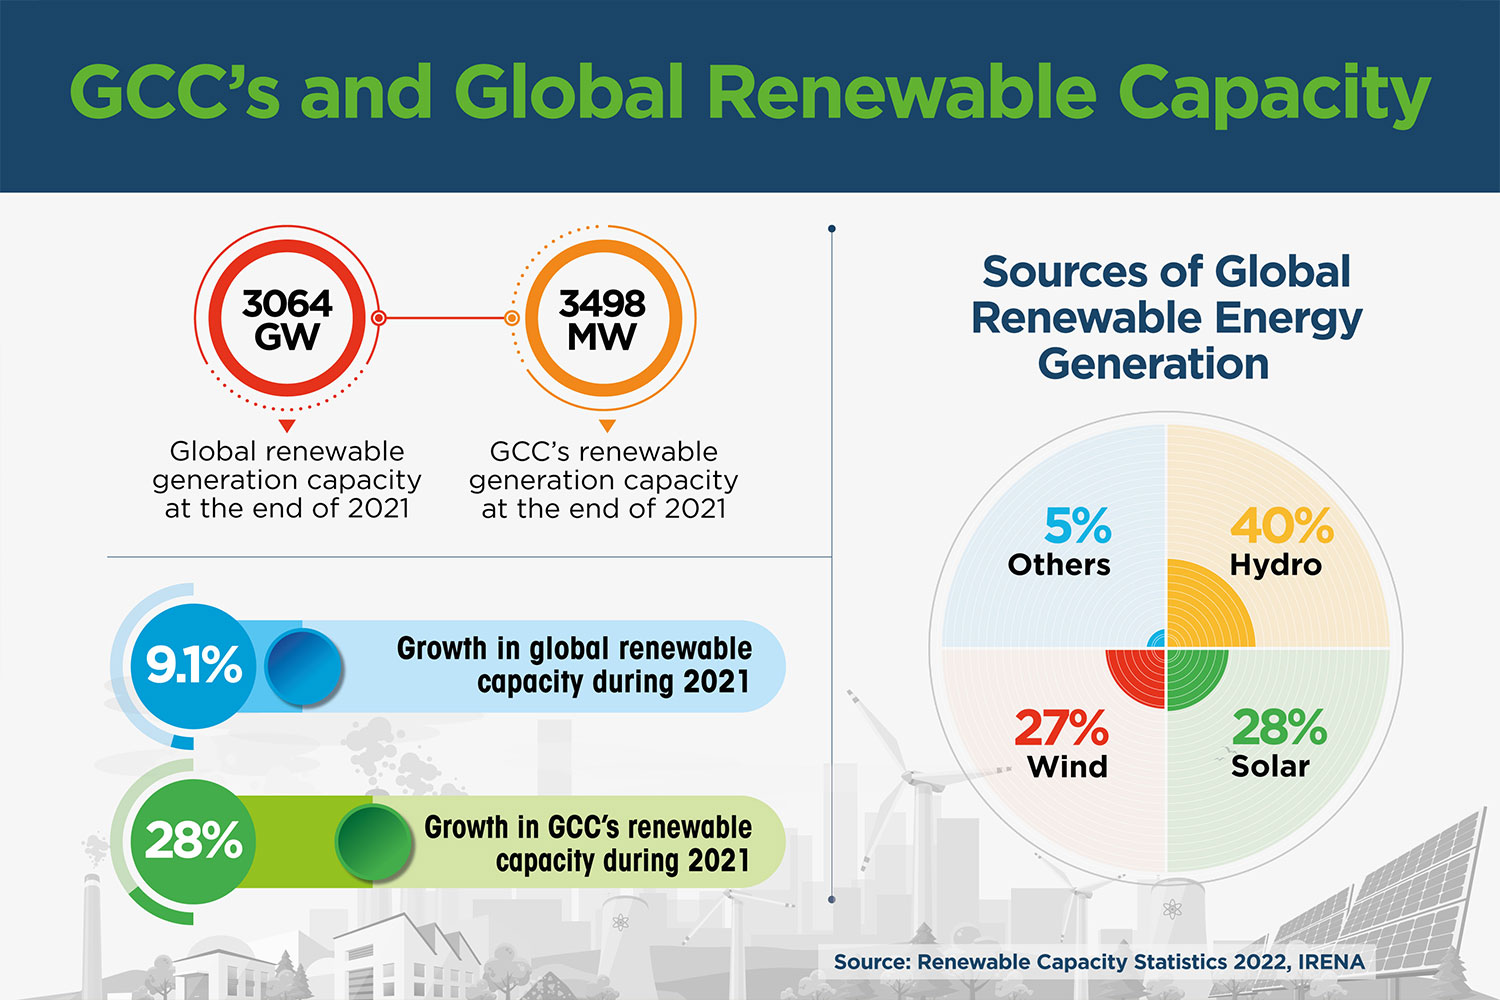 GCC's and Global Renewable Capacity